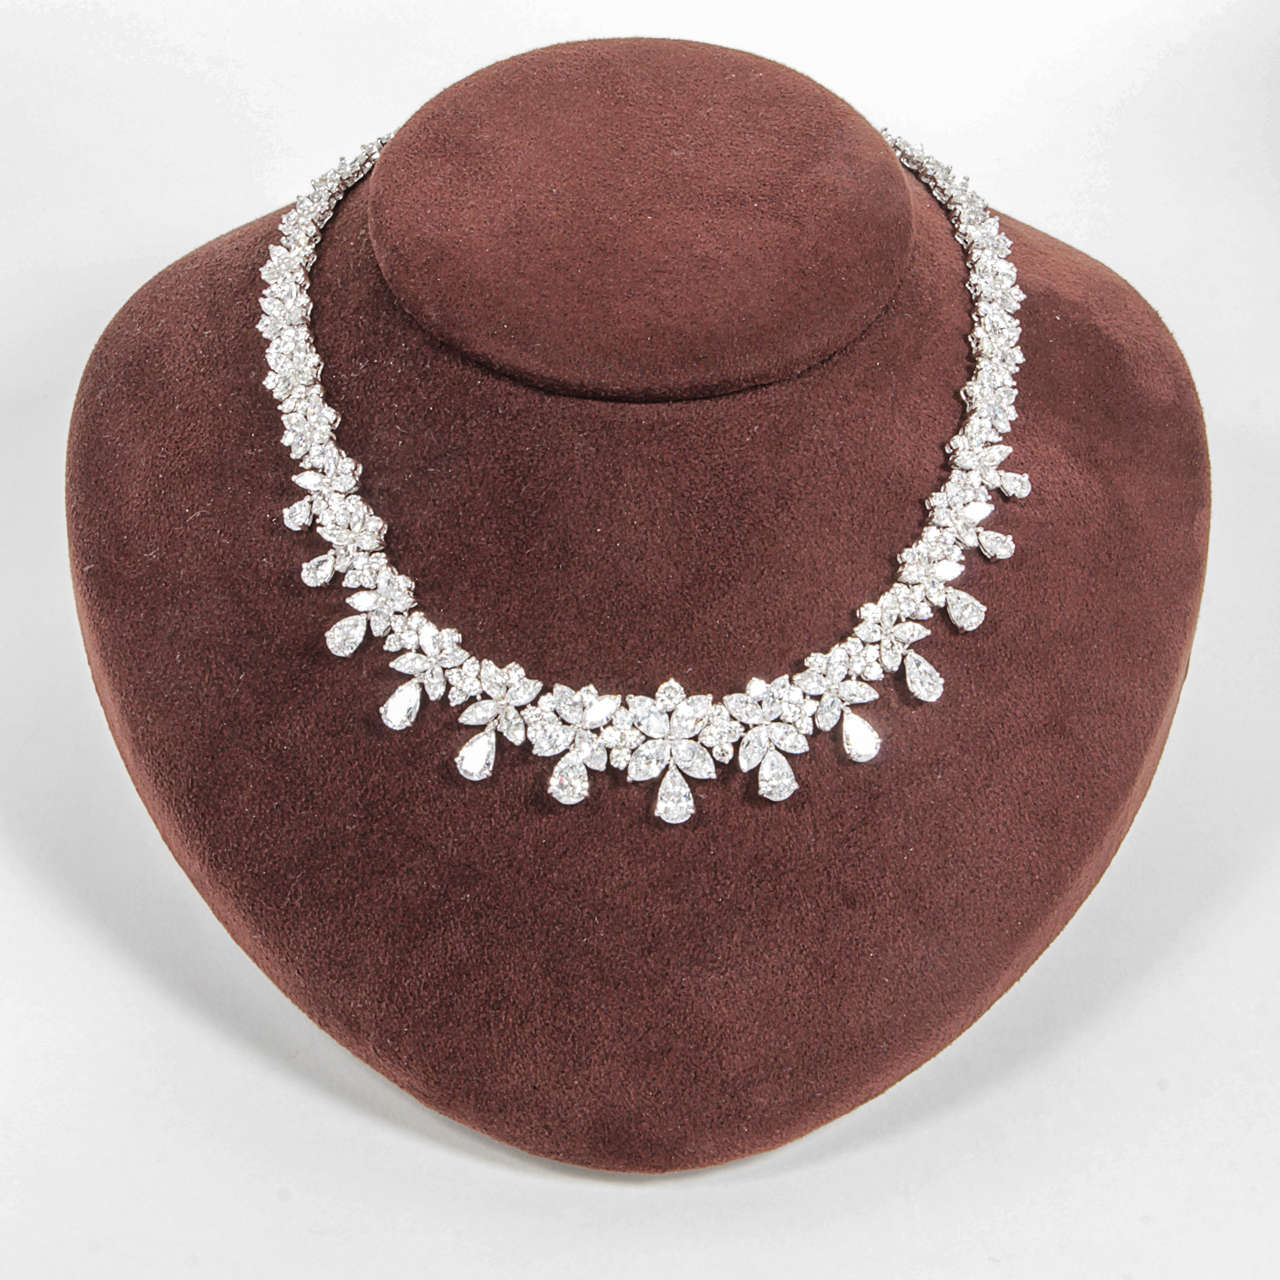 An elegant and timeless design.

56.61 carats of white brilliant diamonds set in platinum.